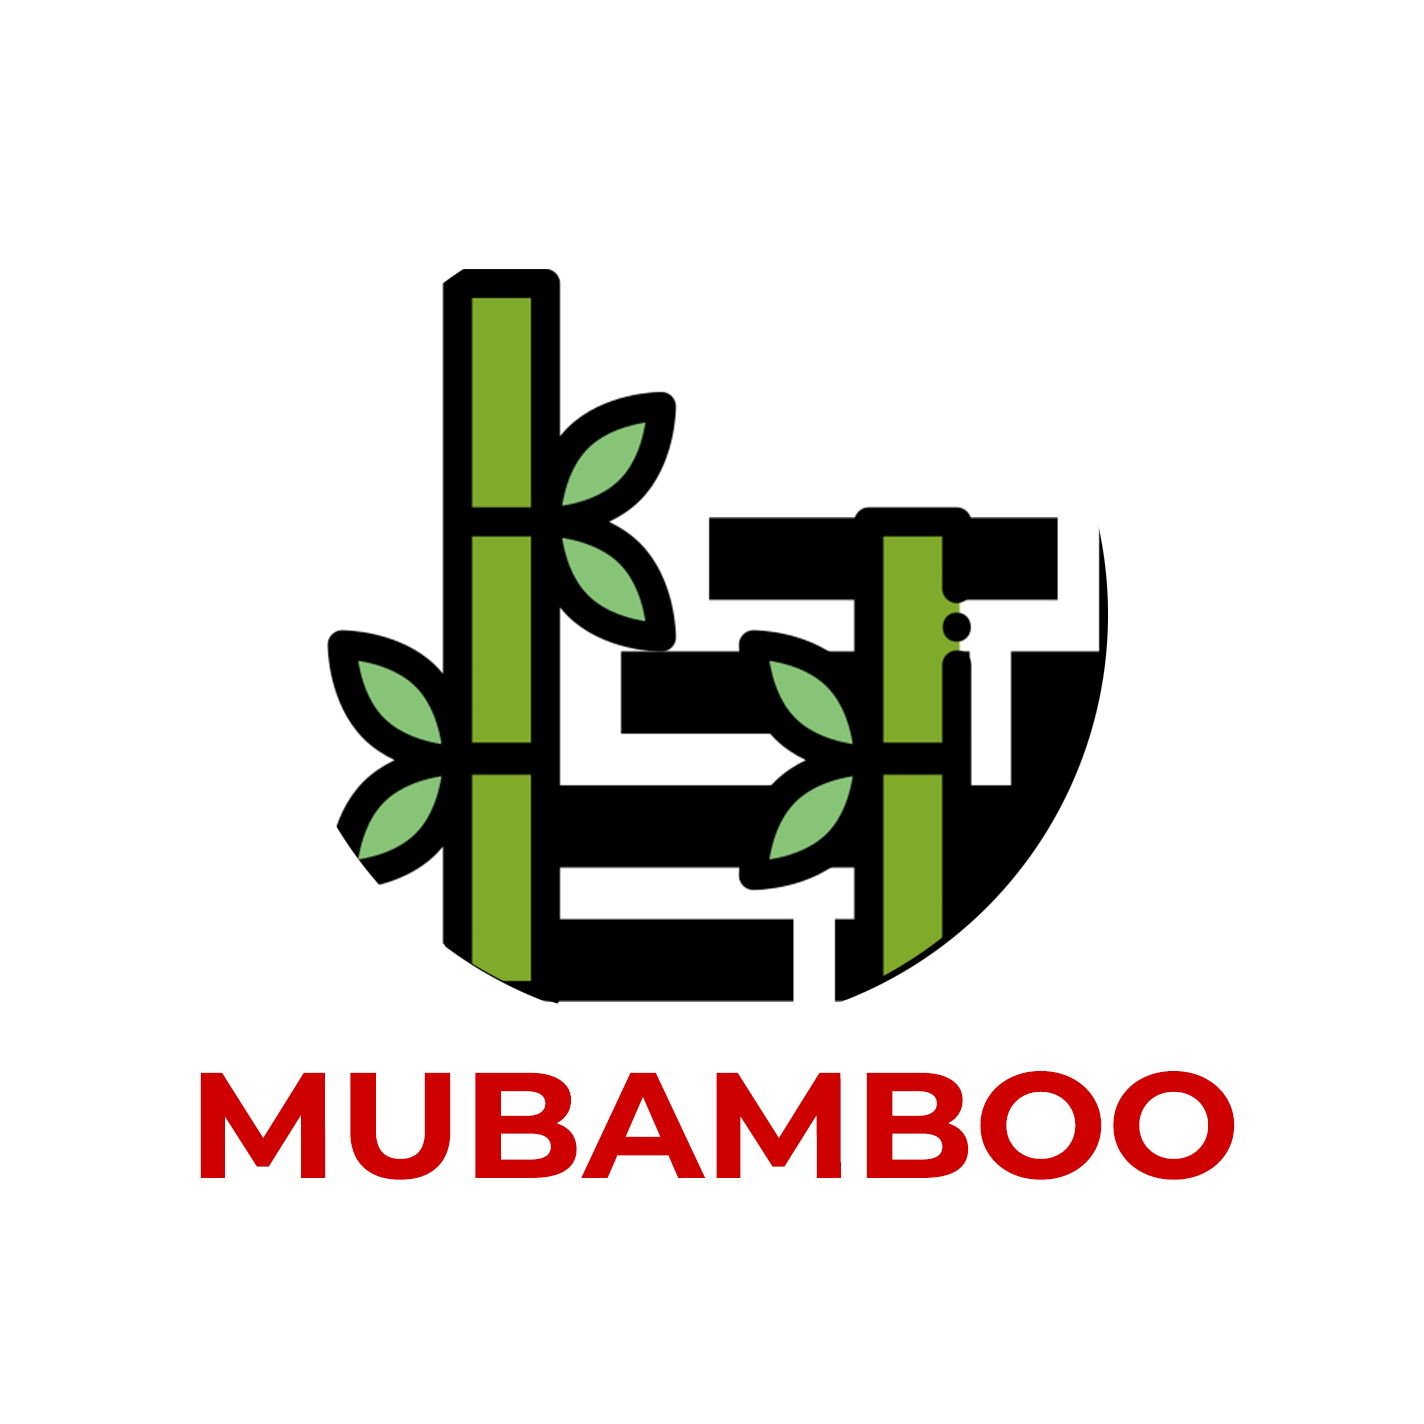 Mubamboo FINAL logo